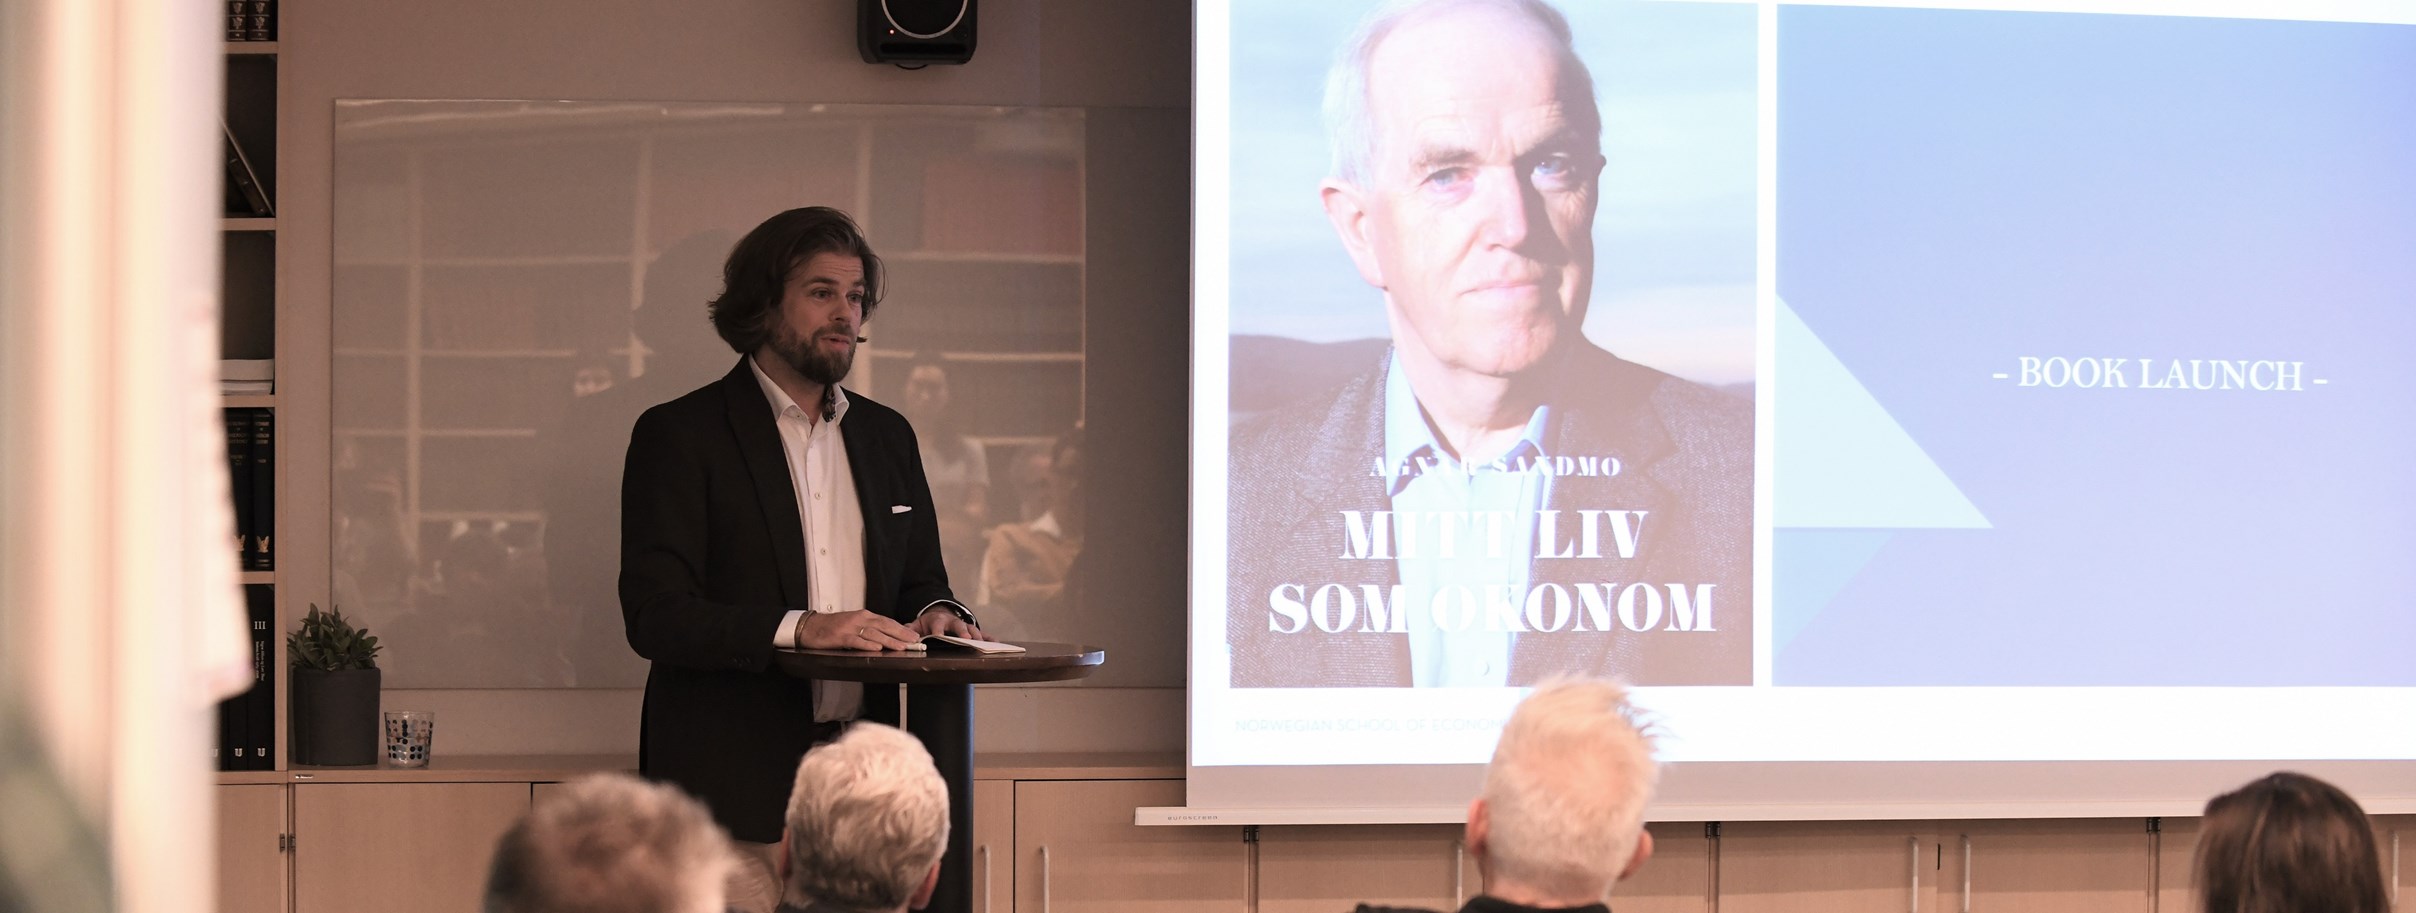 Sigurd Sandmo, booklaunch NHH 30. August 2019.